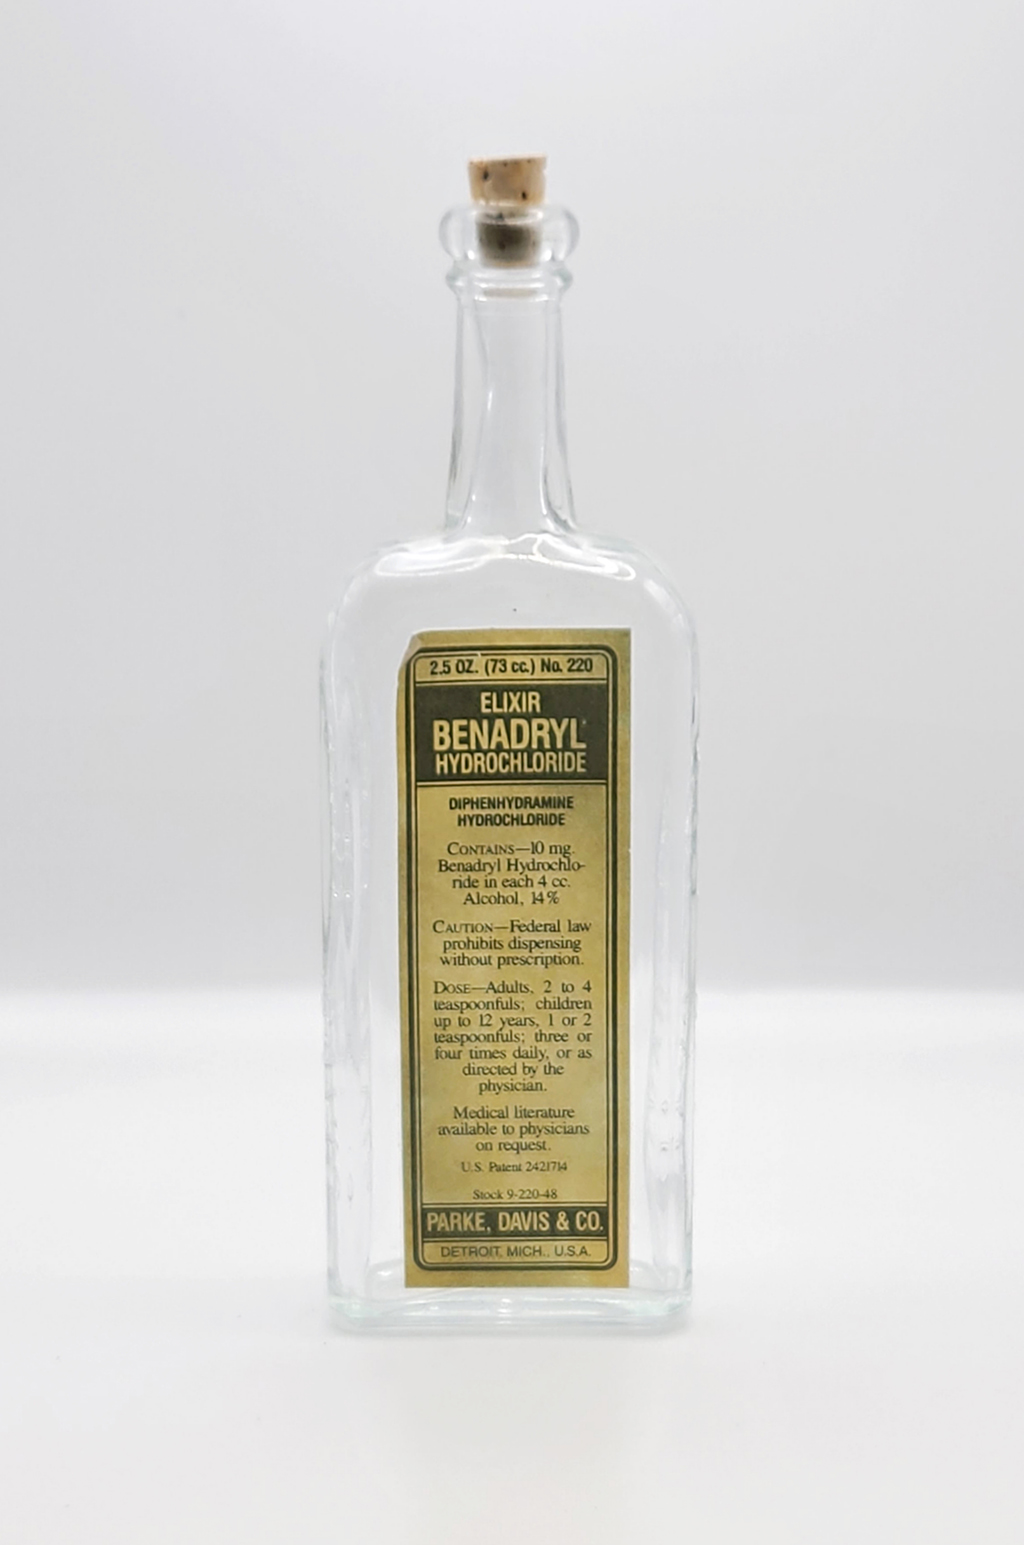 Clear bottle displays a yellow and green label, "Elixir Benadryl"